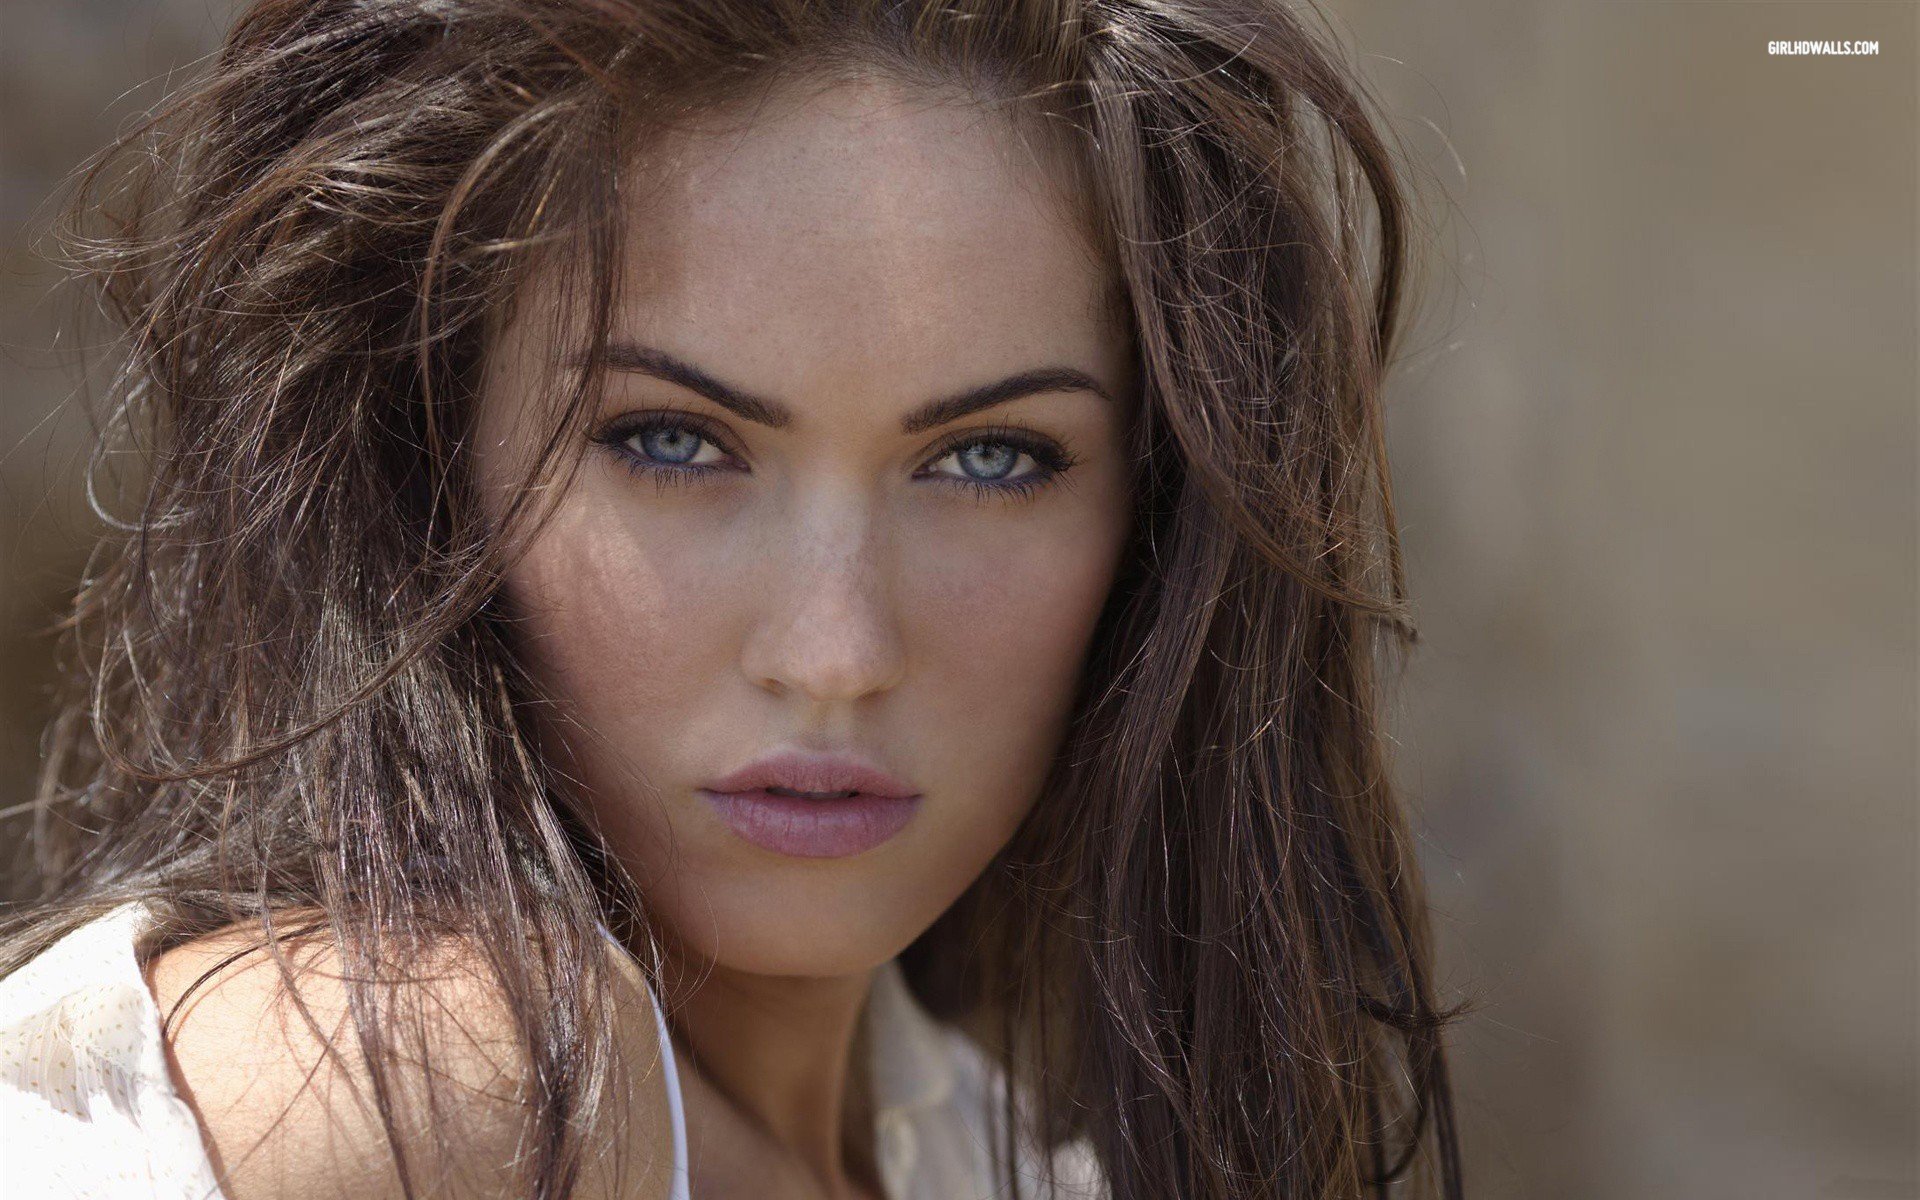 Megan Fox Blue Eyes Model Actress Juicy Lips Women Hd Images, Photos, Reviews